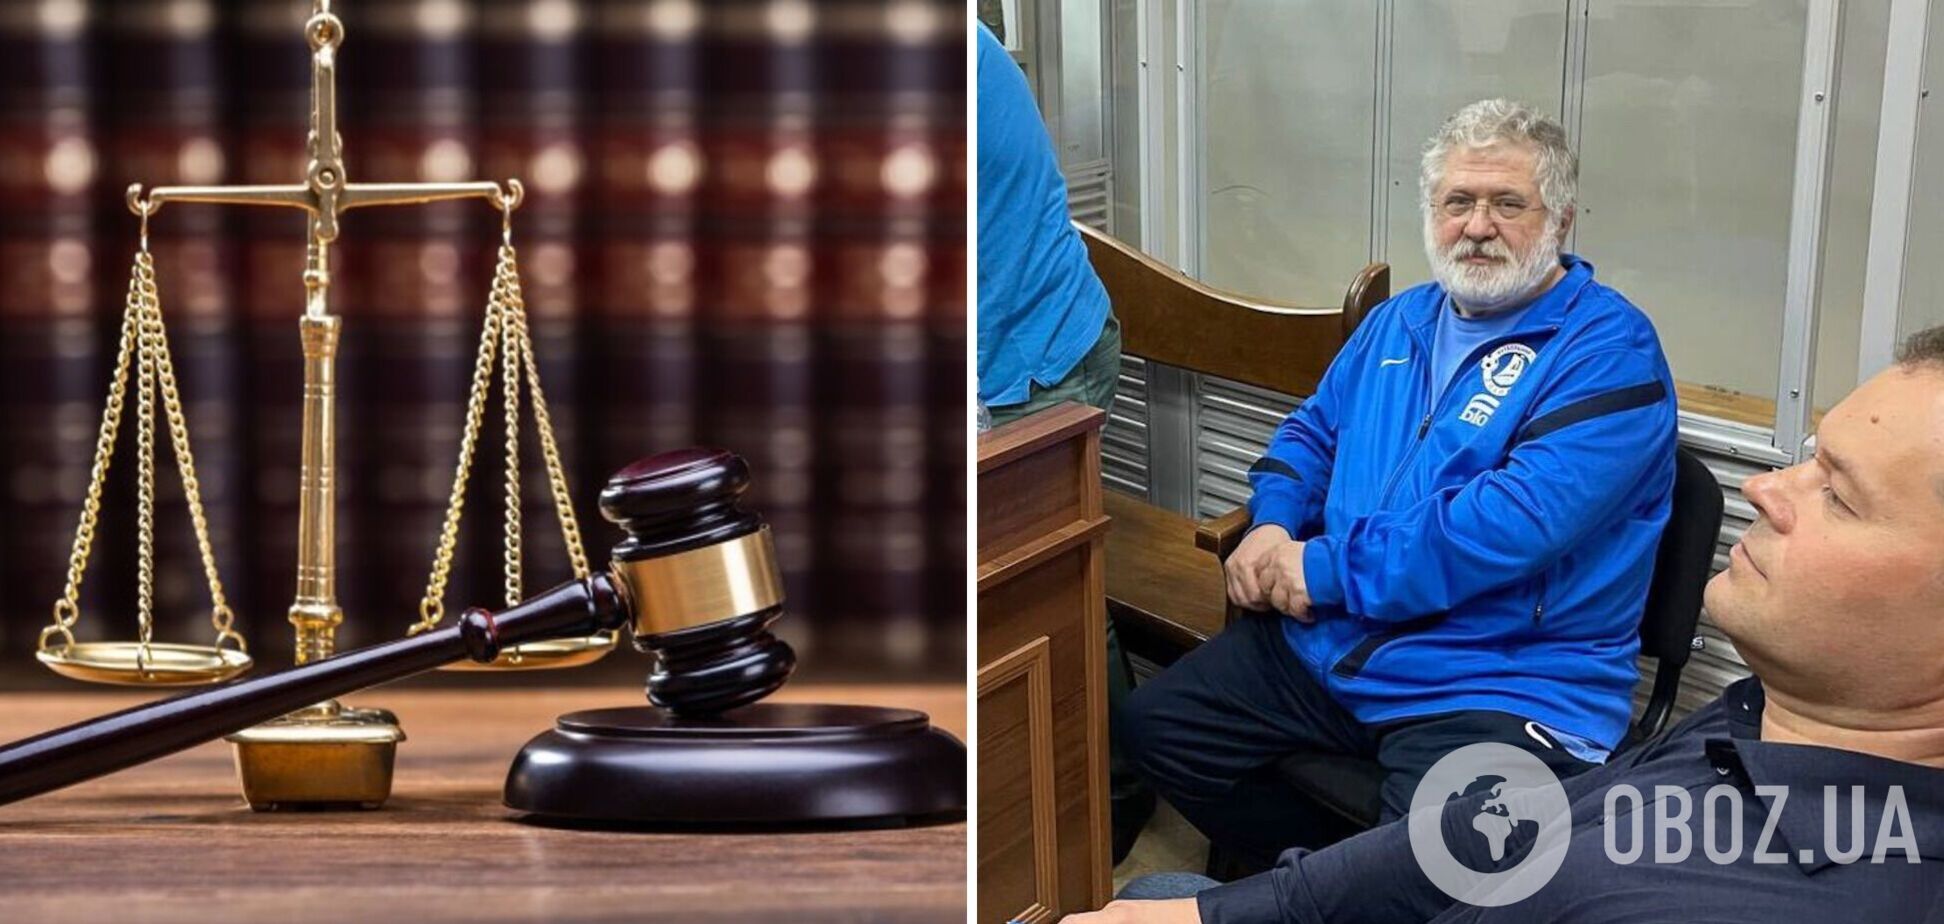 Суд избрал новую меру пресечения для Коломойского: размер залога увеличен в 7,4 раза. Фото